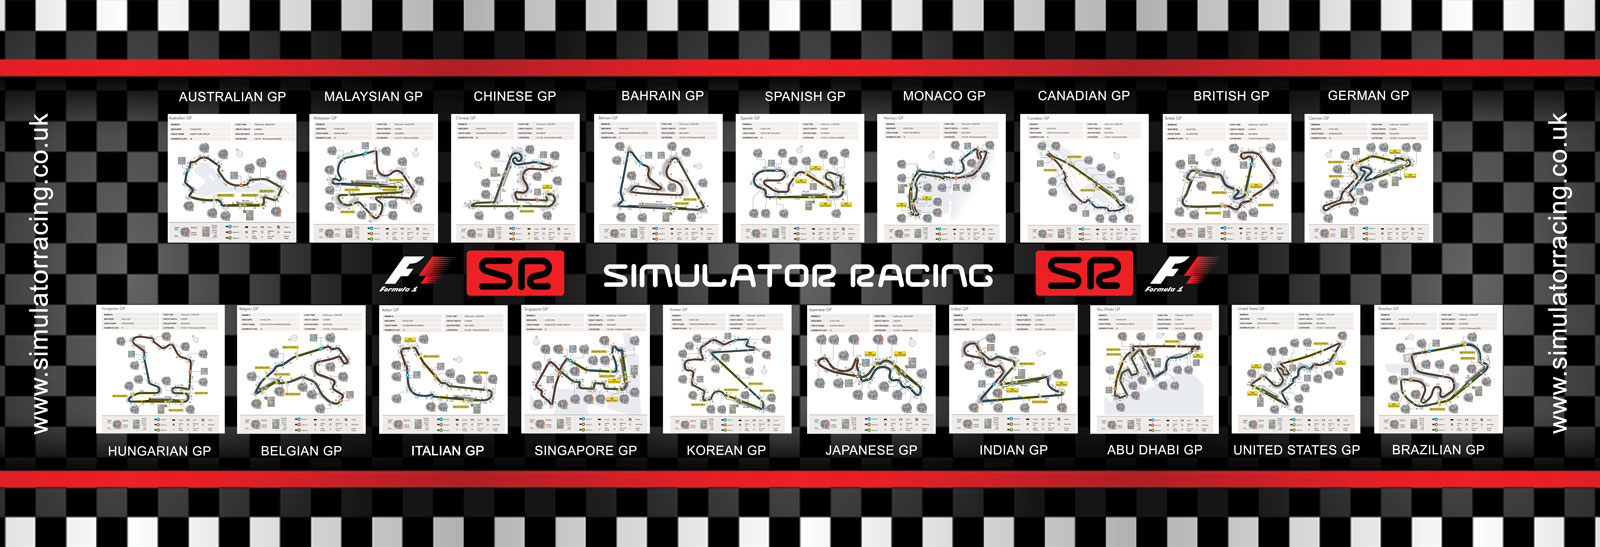 F1 2013 Circuits 20' Banner